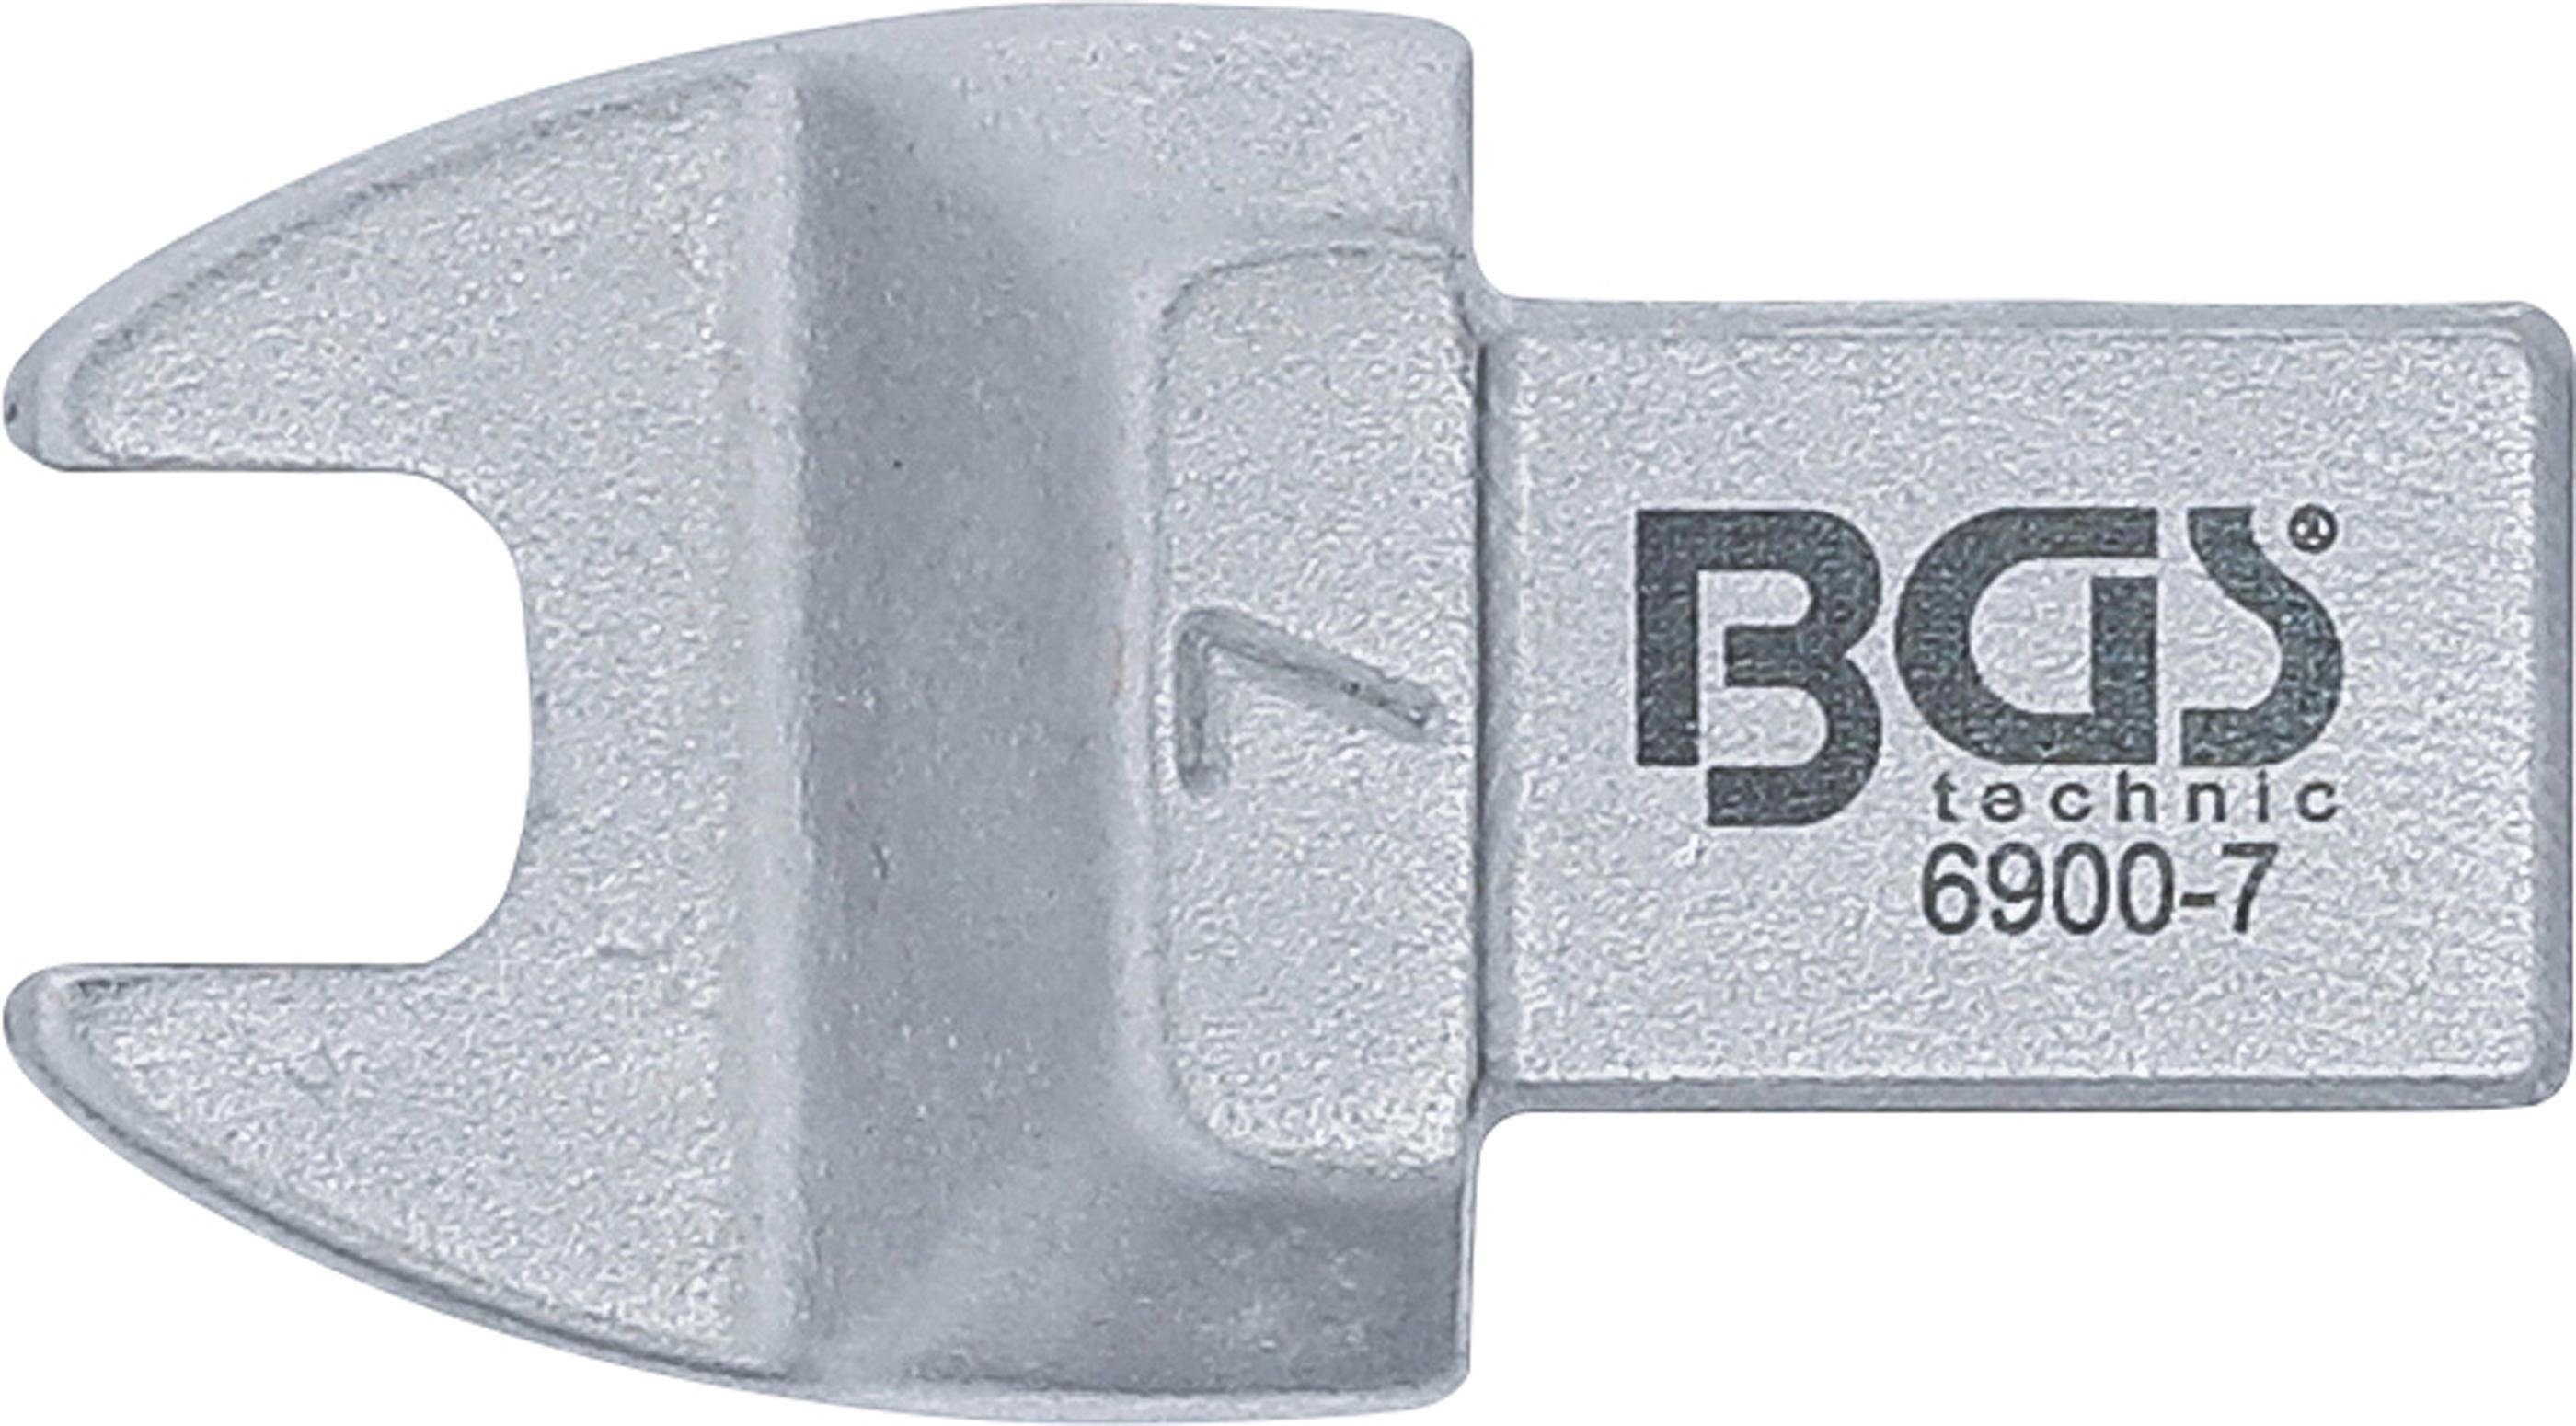 mm, Maulschlüssel technic BGS 9 12 Einsteck-Maulschlüssel, x 7 mm Aufnahme